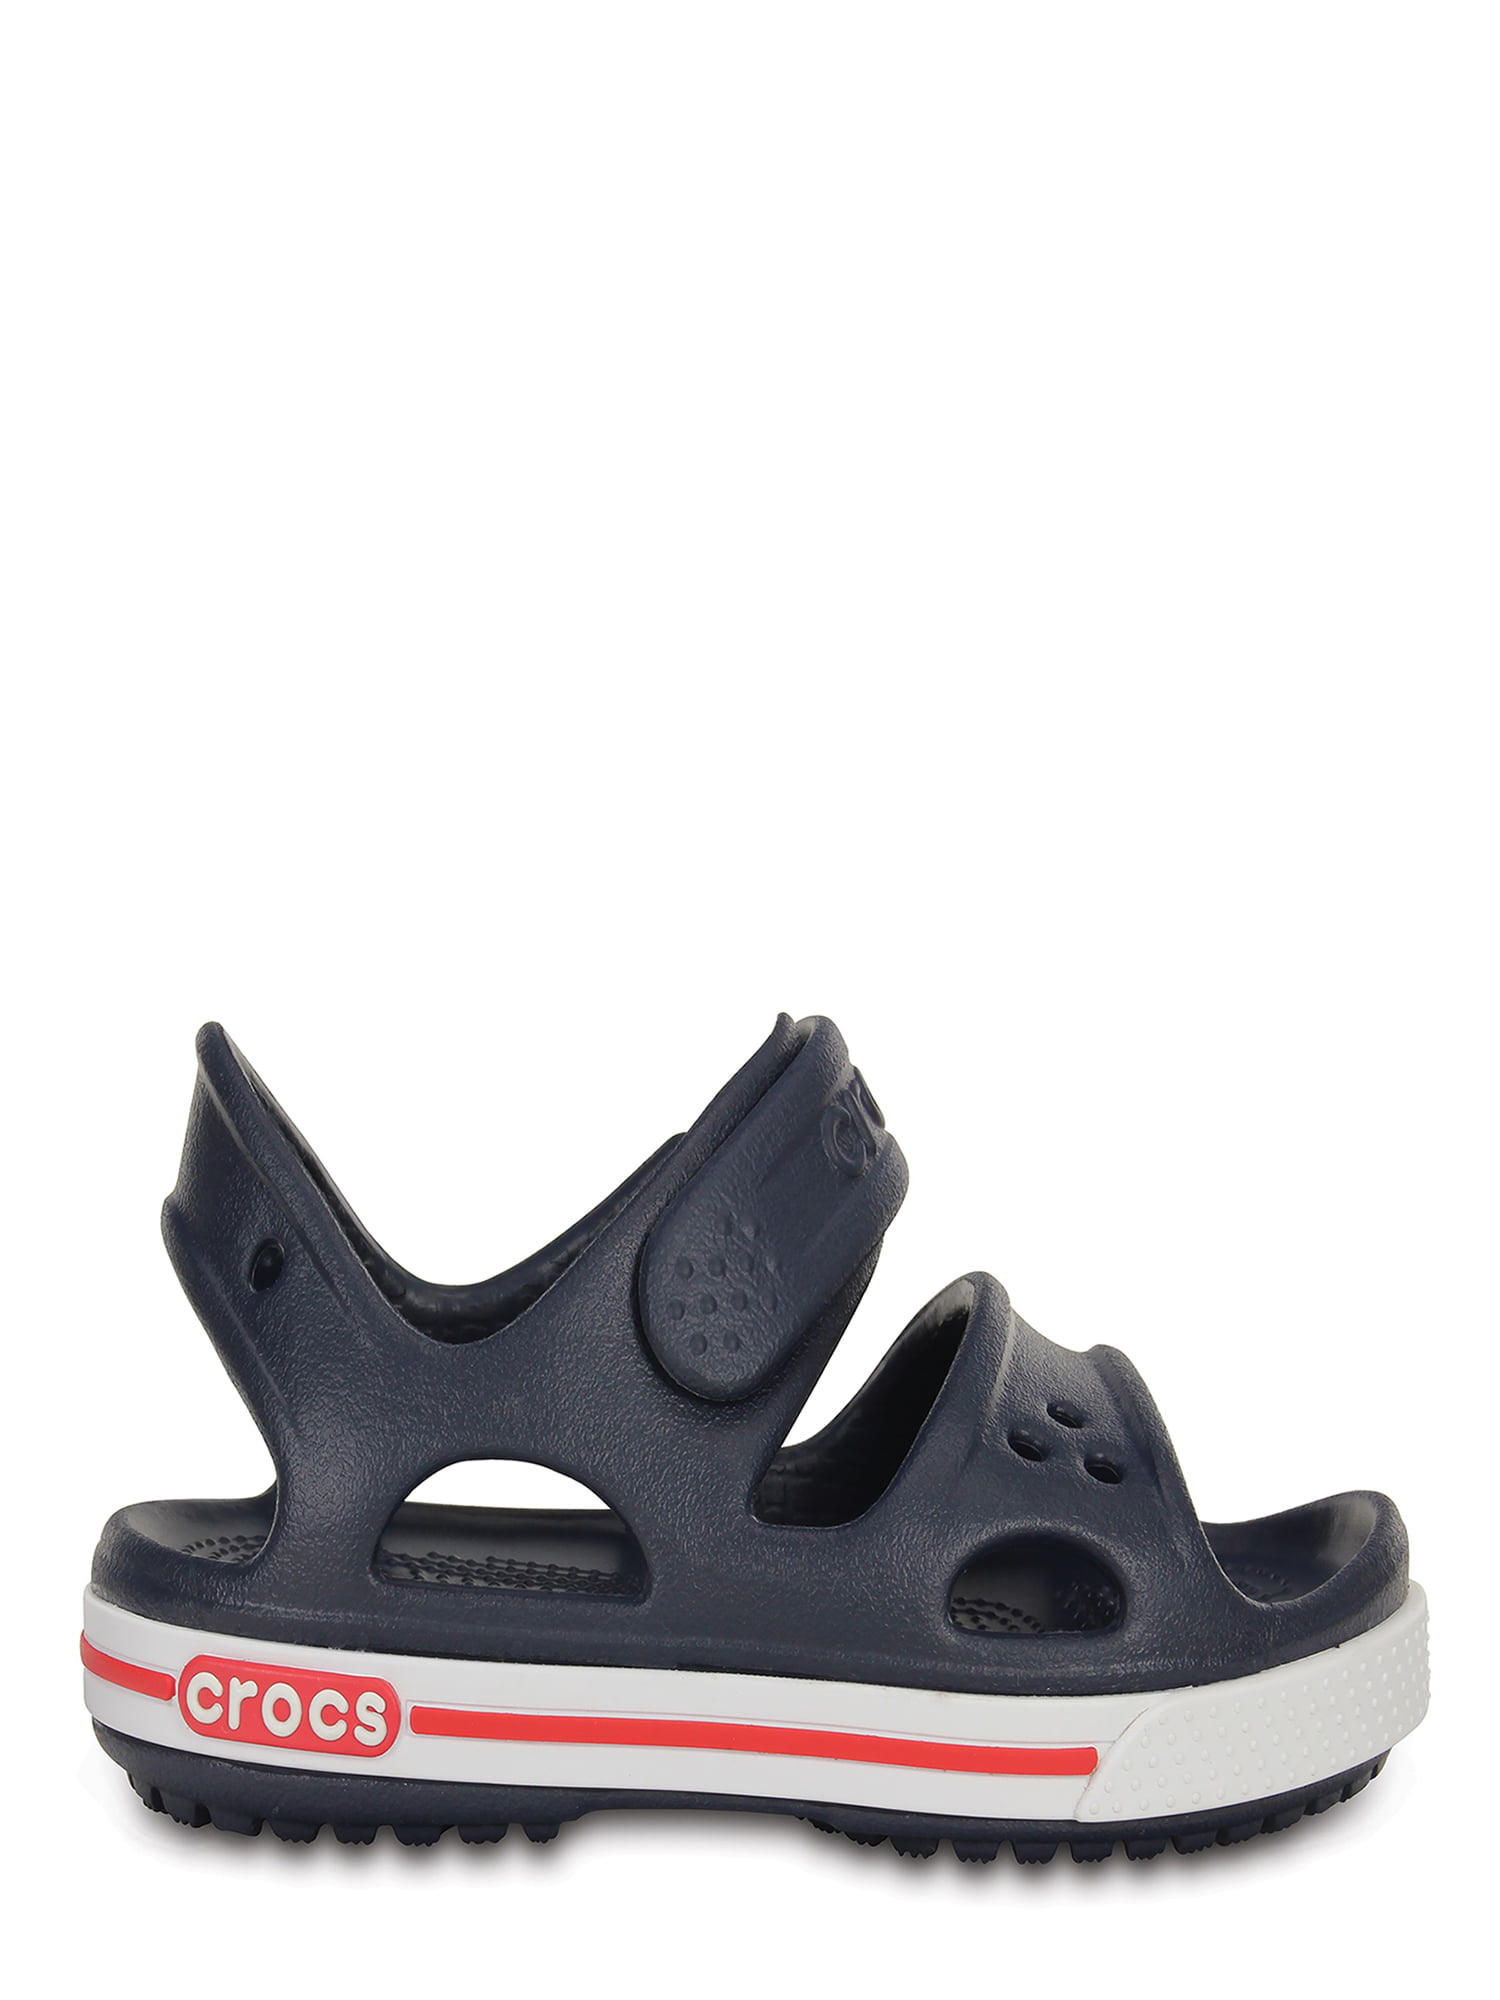 Crocs Kids Crocband II Sandal